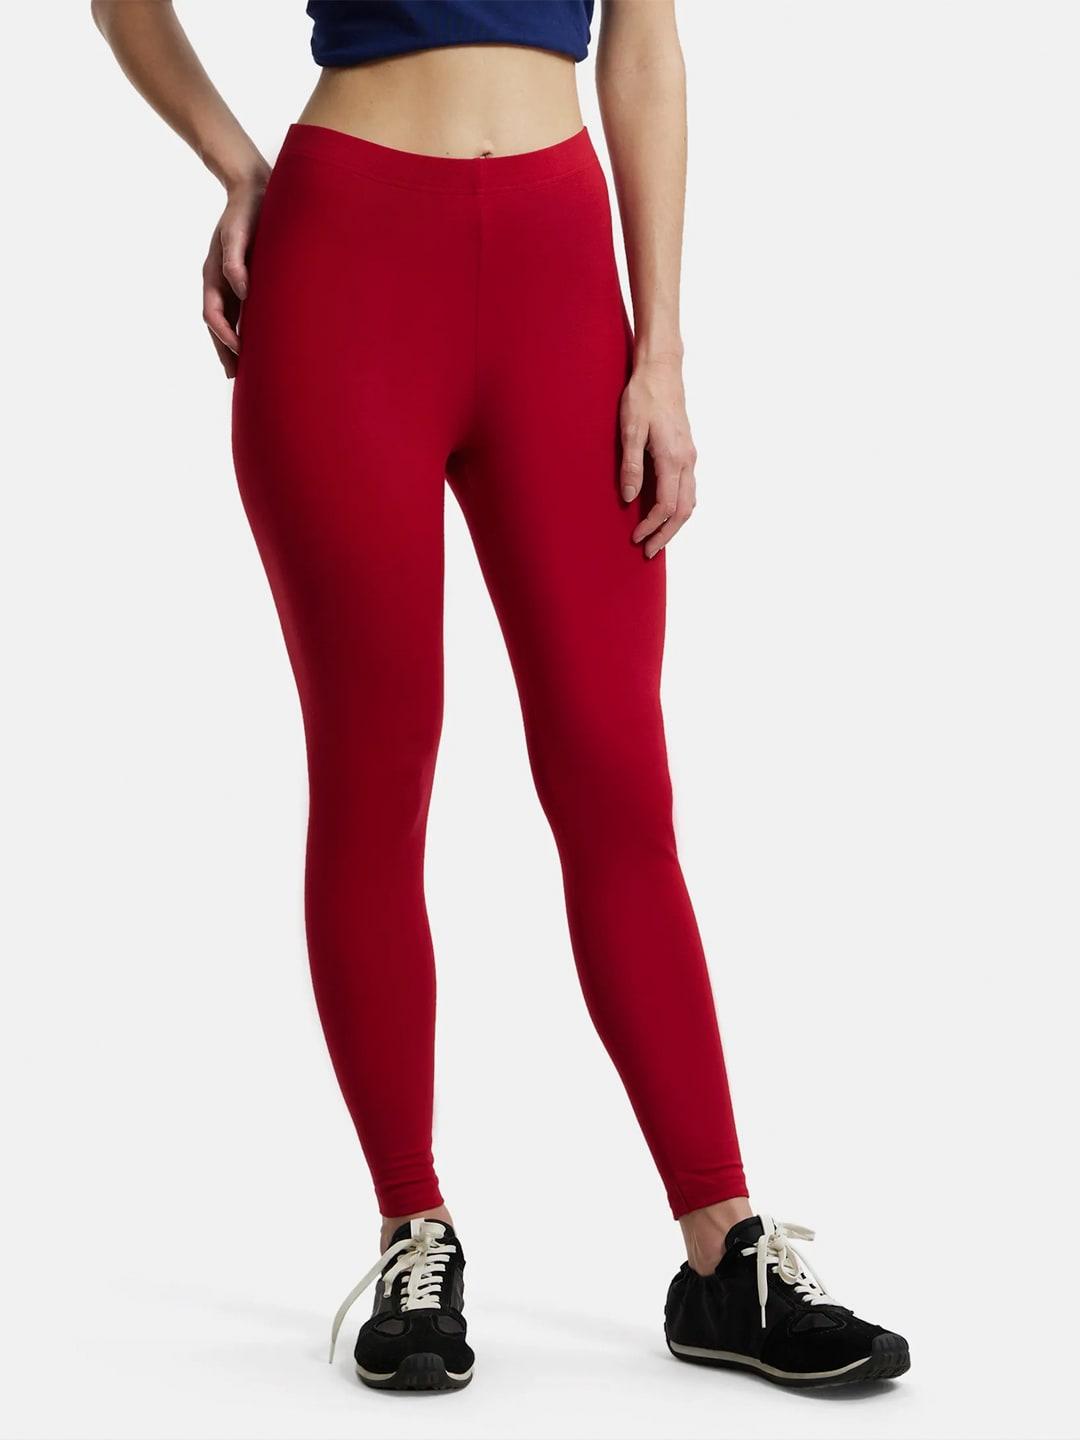 jockey women red solid track pant